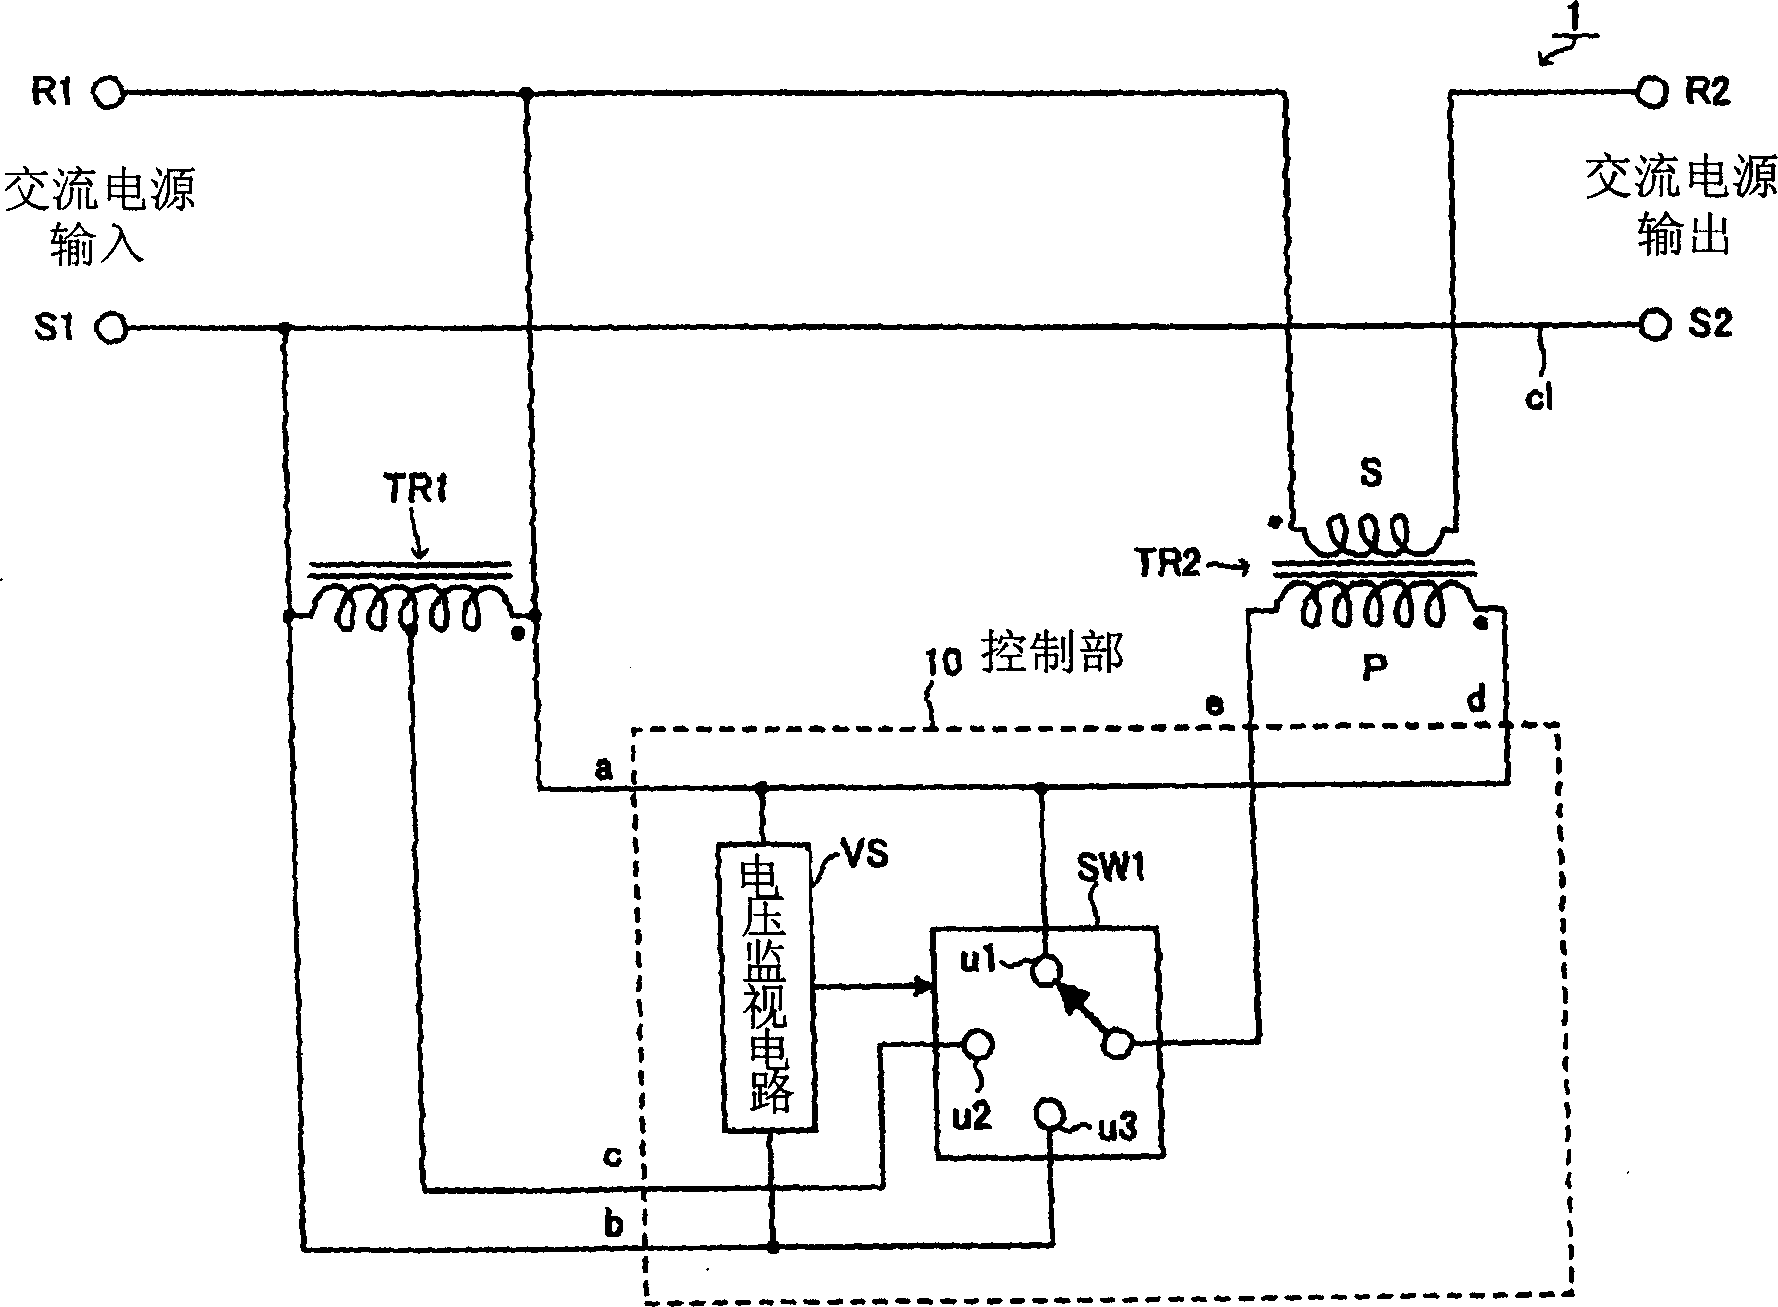 A. c. electricity control device